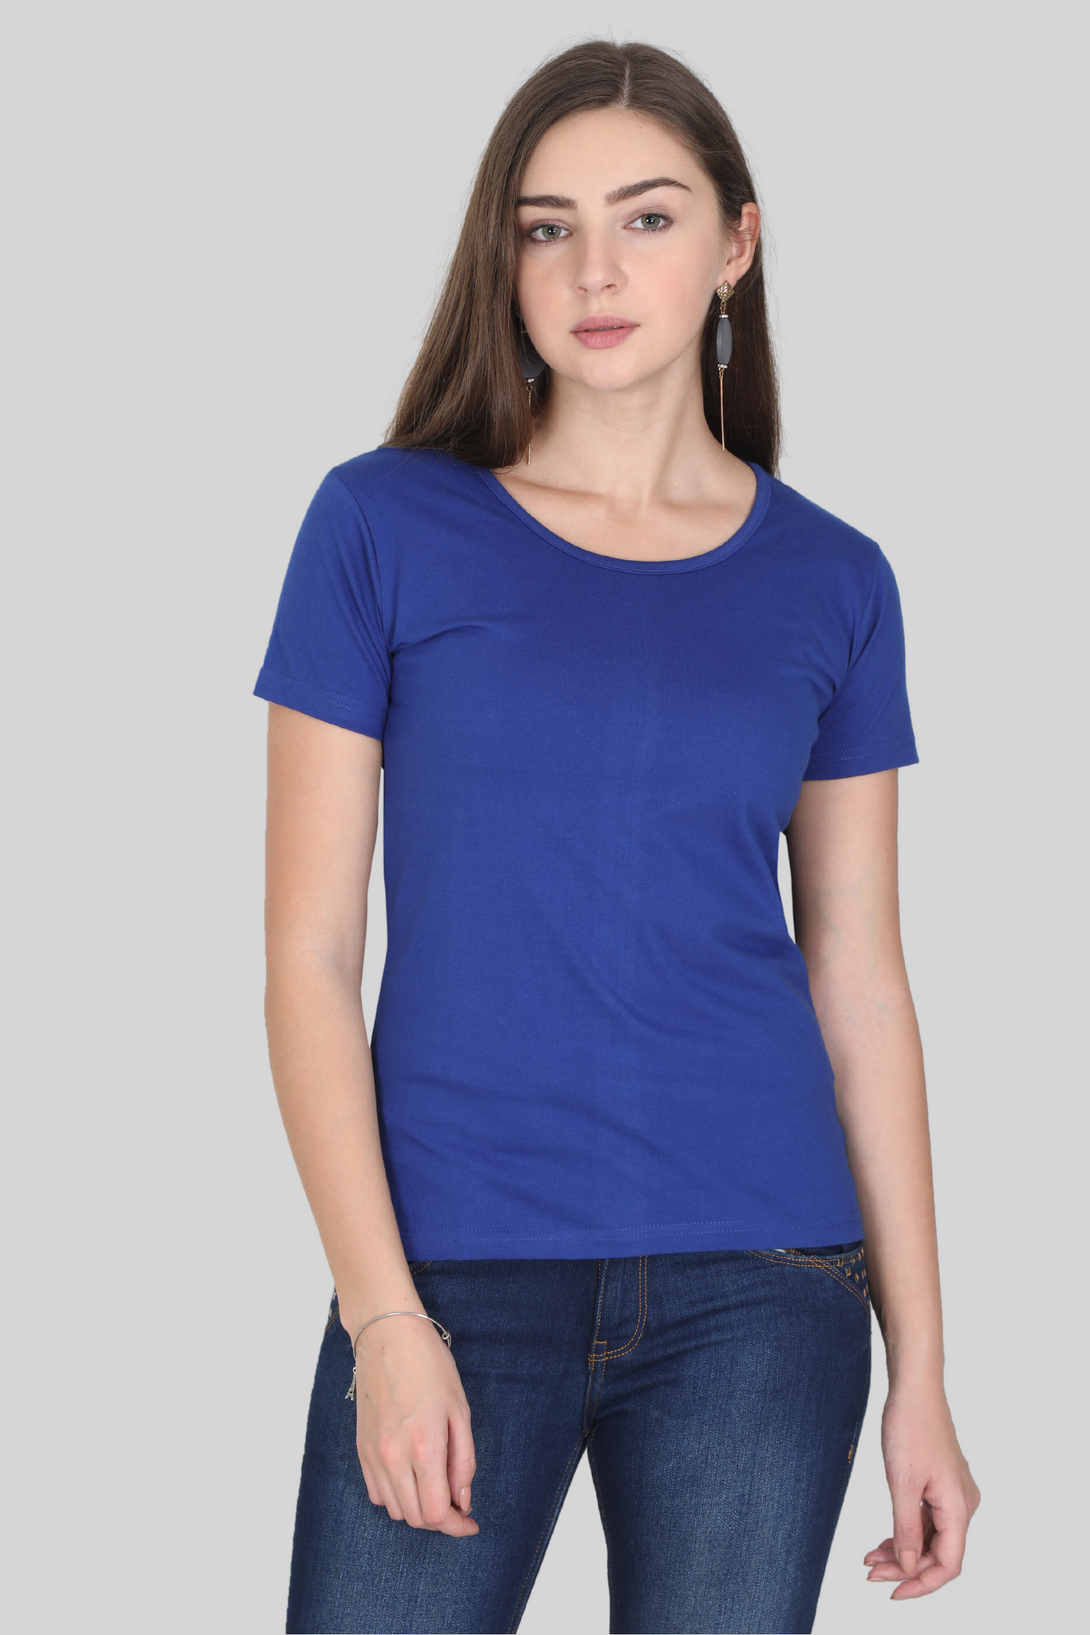 Royal Blue Scoop Neck T-Shirt For Women - WowWaves - 3